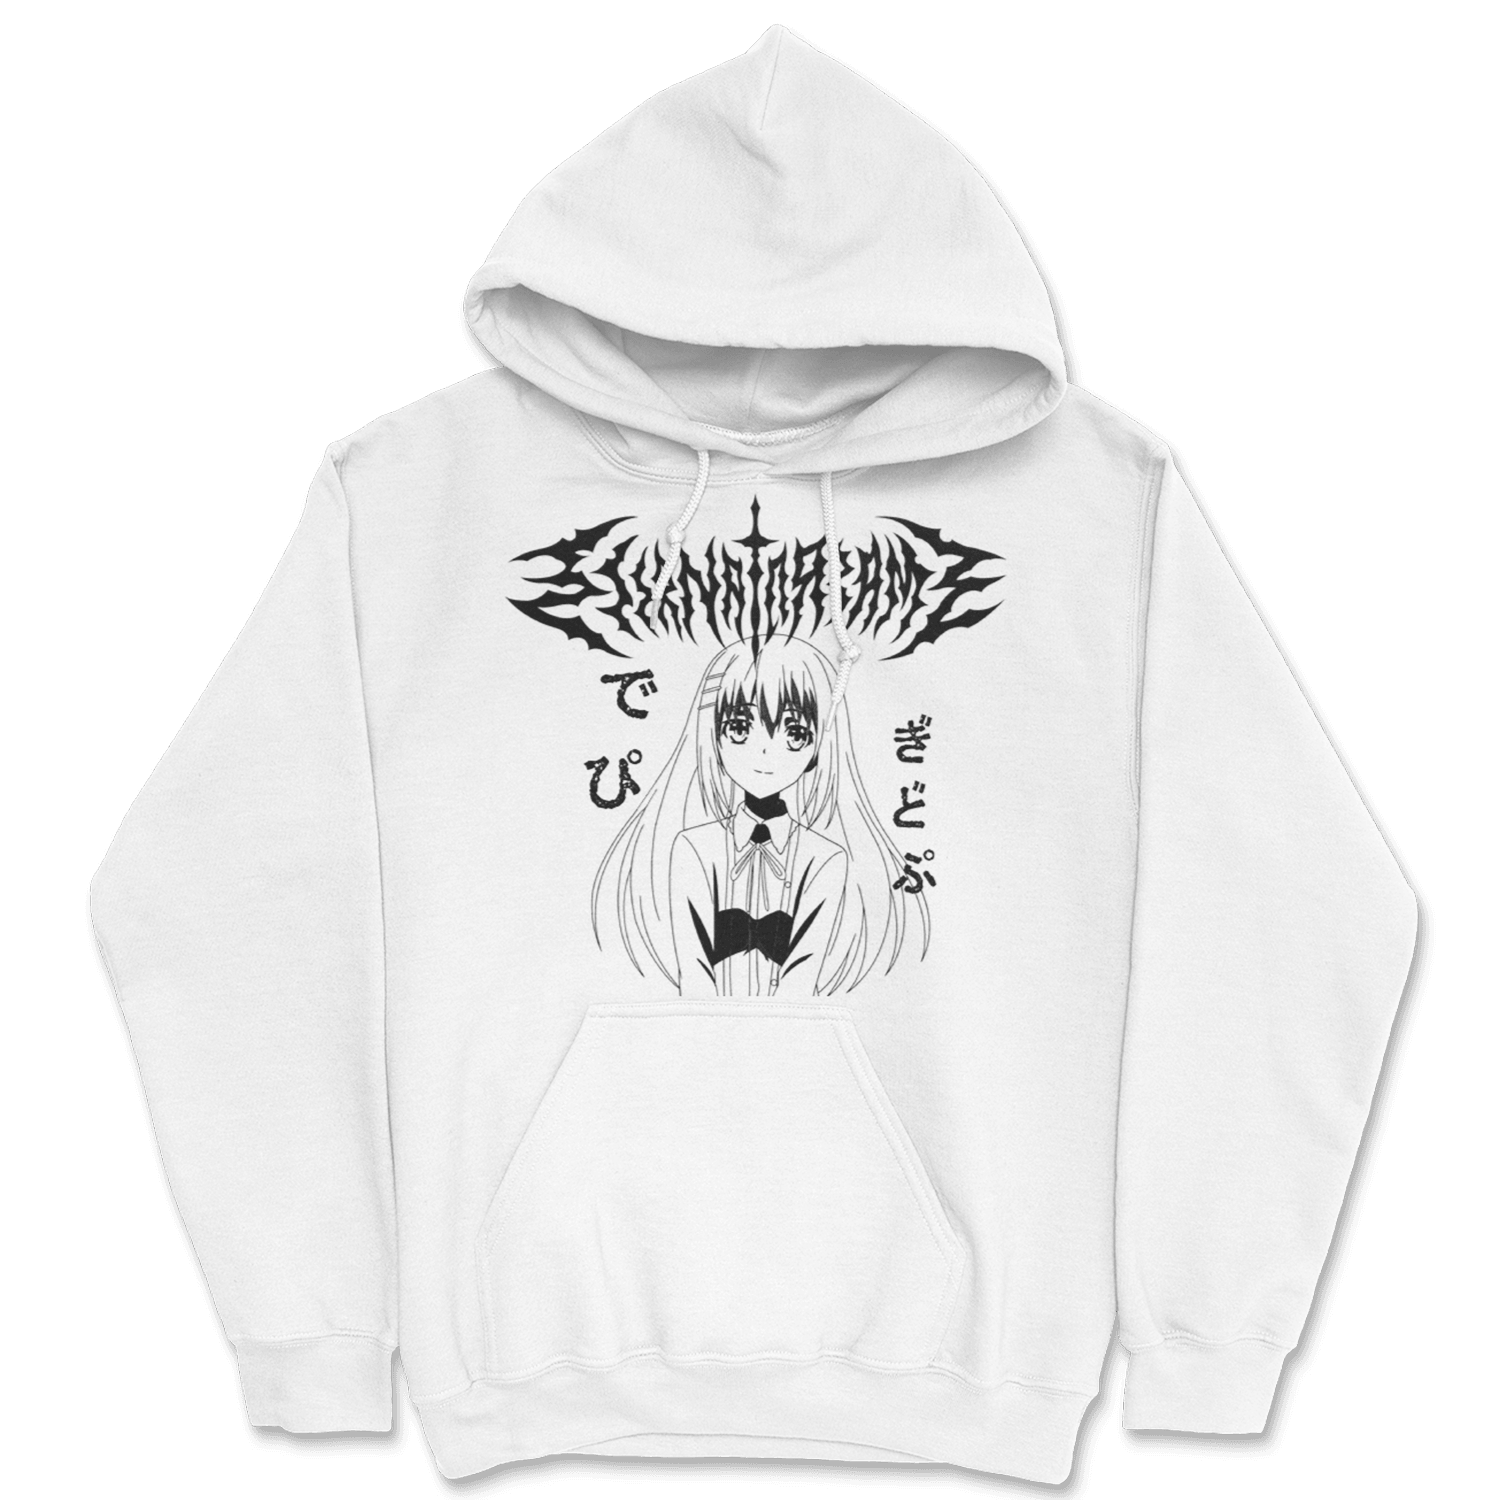 Seinaru - Eternal Dreamz Clothing Anime Streetwear & Anime Clothing